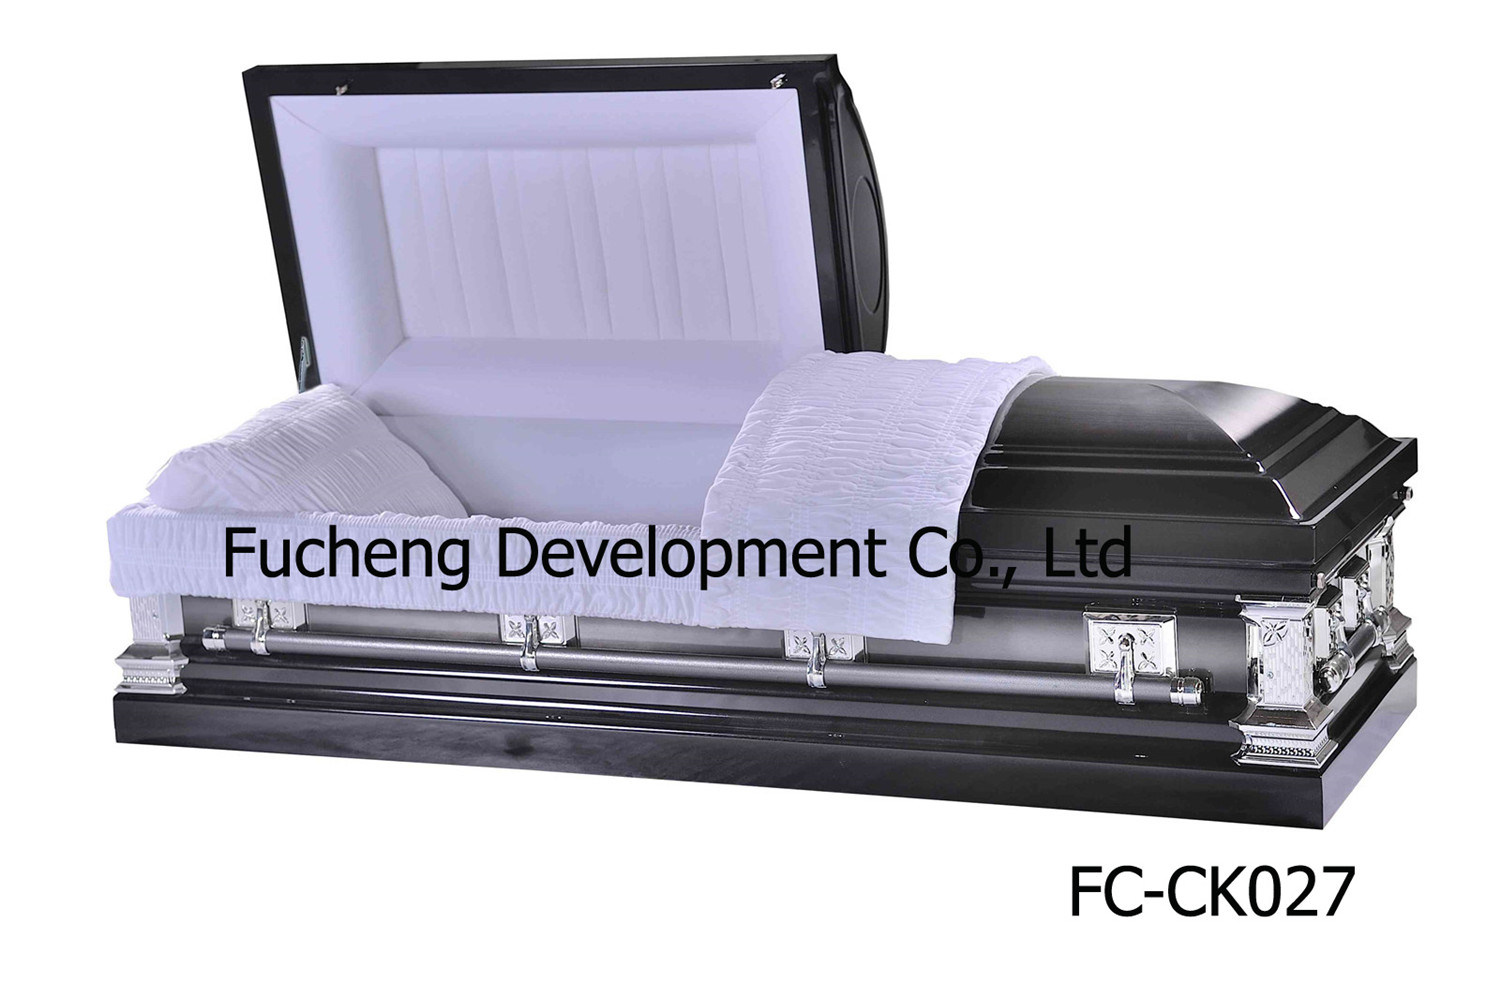 18ga American Style Steel Metal Funeral Caskets Coffin - Black Brushed Natural Finish & White Velvet Interiors (FC-CK027)